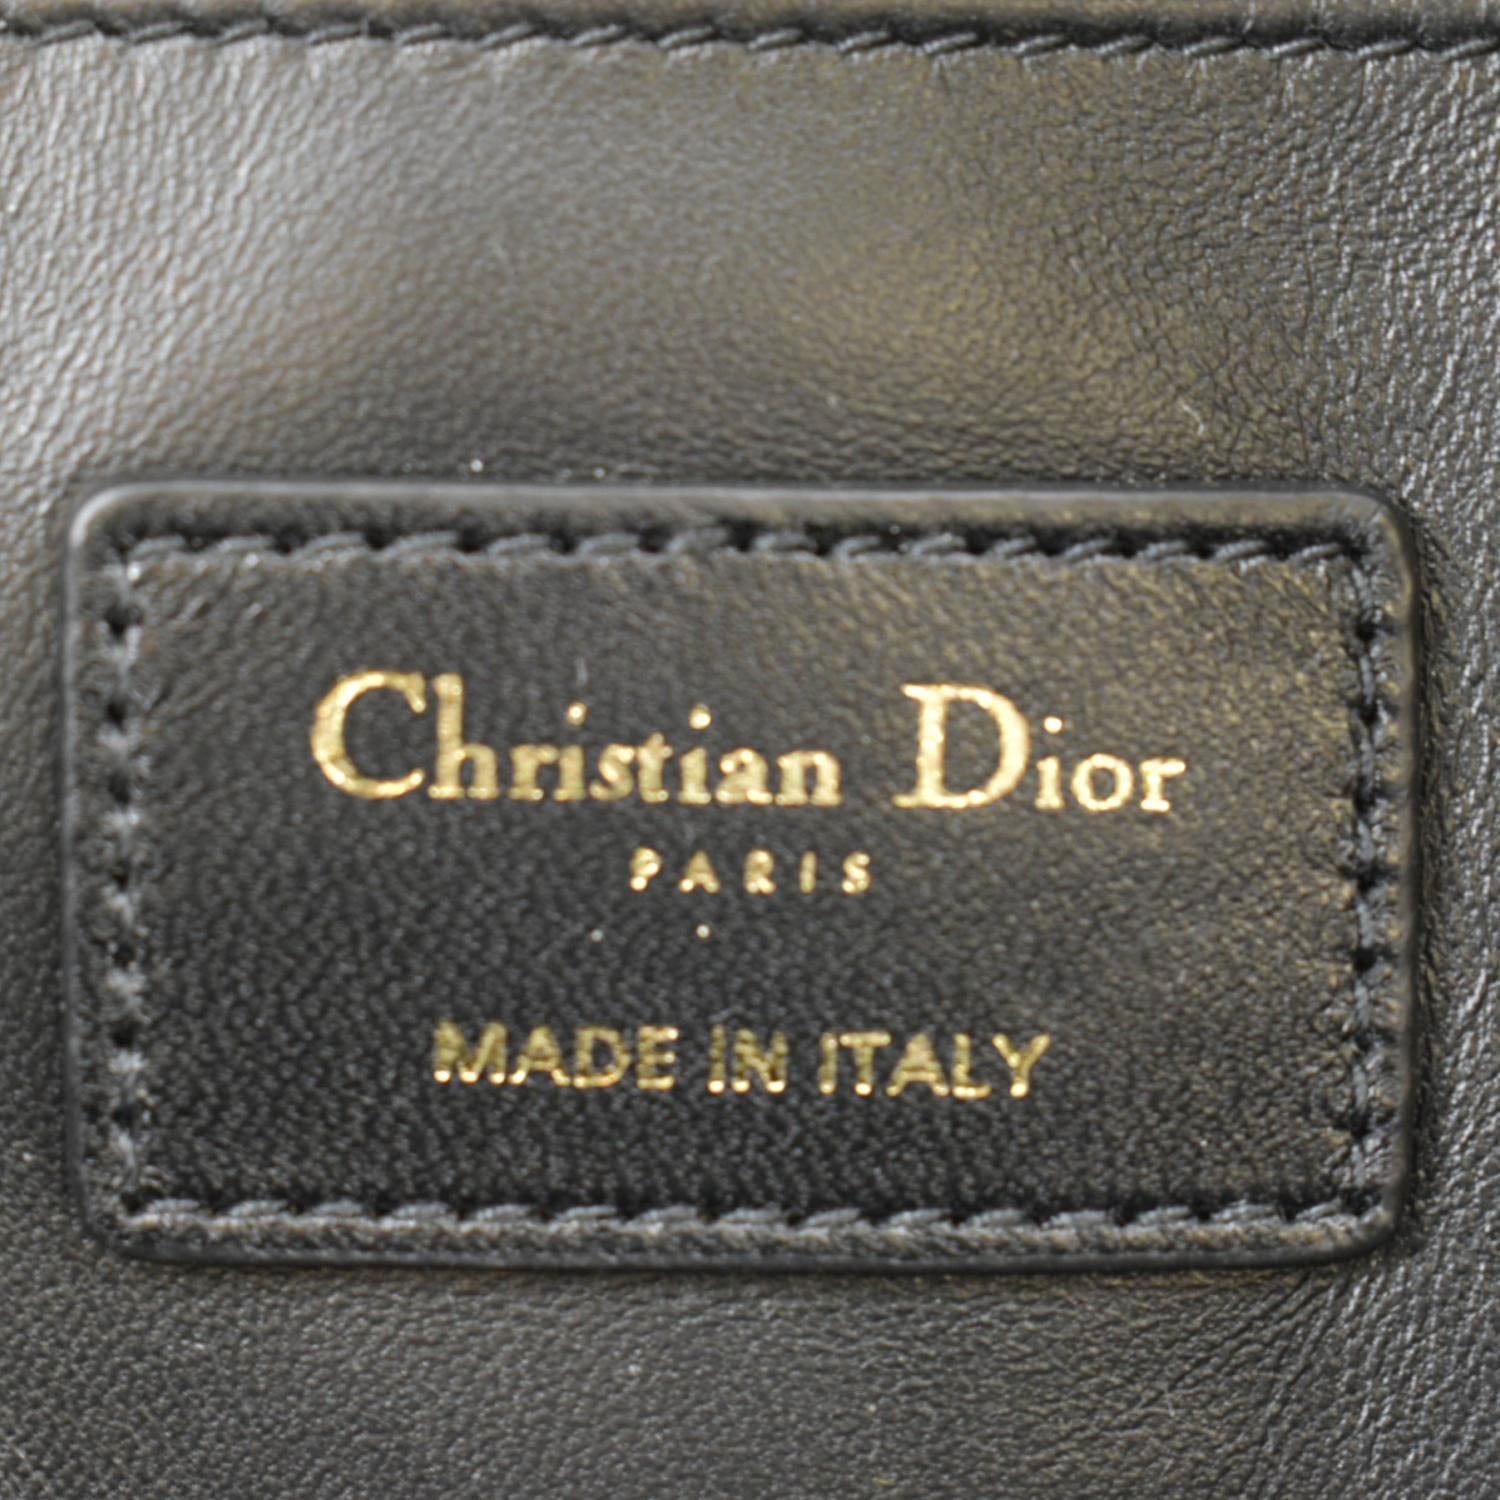 CHRISTIAN DIOR PARIS Vintage Leather Double Handles Handbag CD